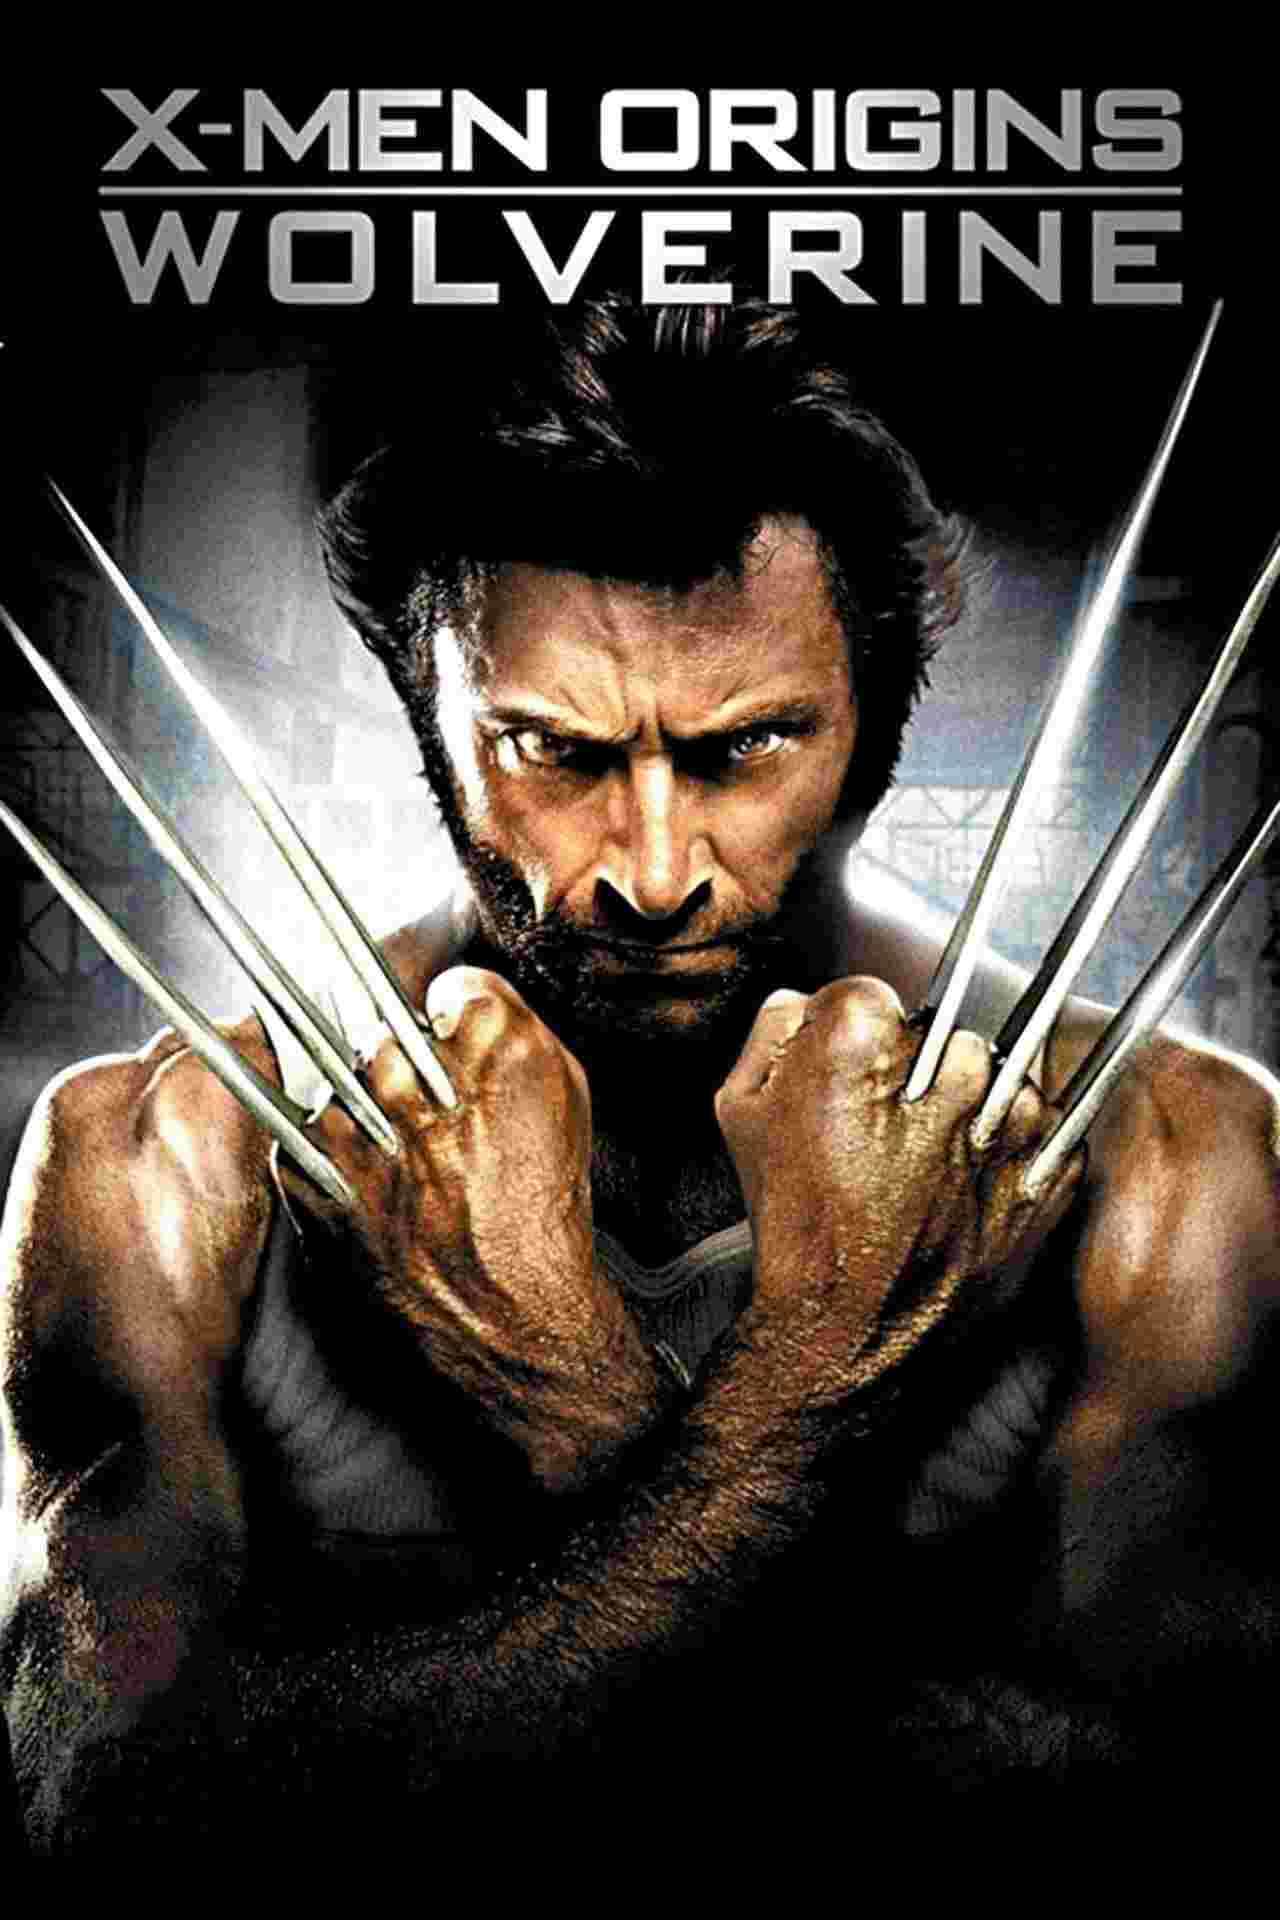 X-Men Origins: Wolverine (2009) Hugh Jackman